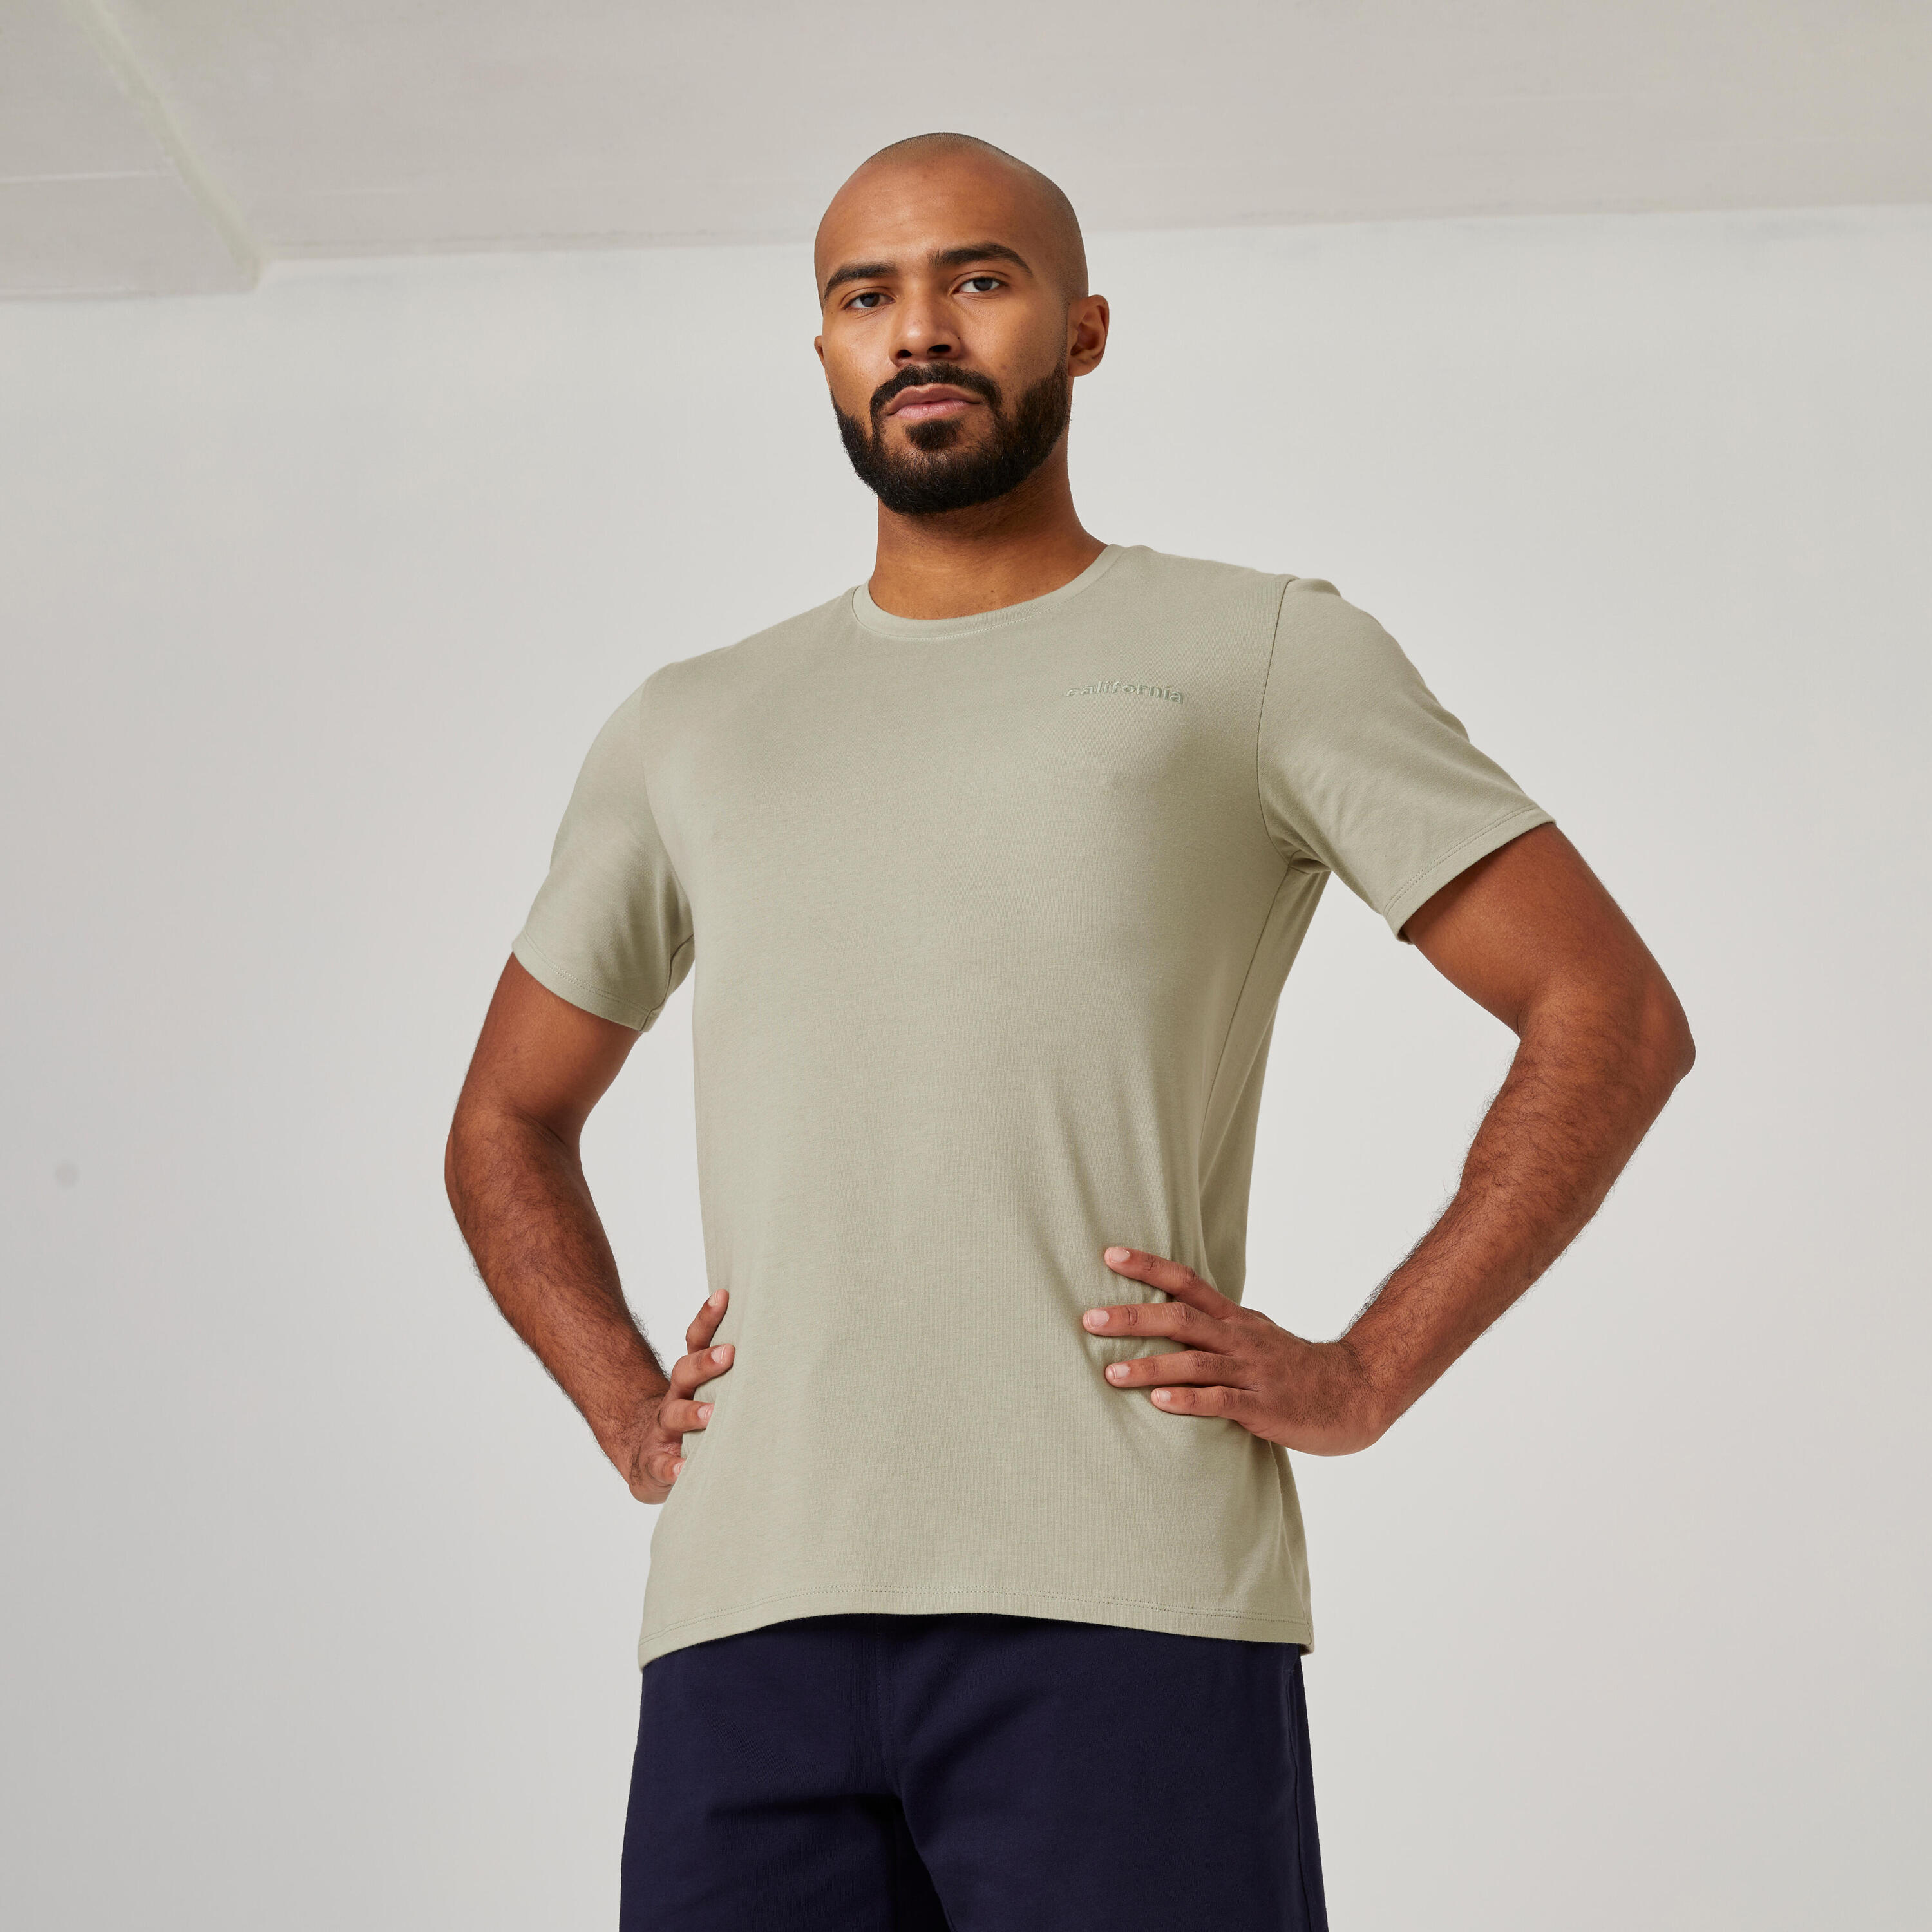 DOMYOS Men's Short-Sleeved Straight-Cut Crew Neck Cotton Fitness T-Shirt 500 - Sage Grey